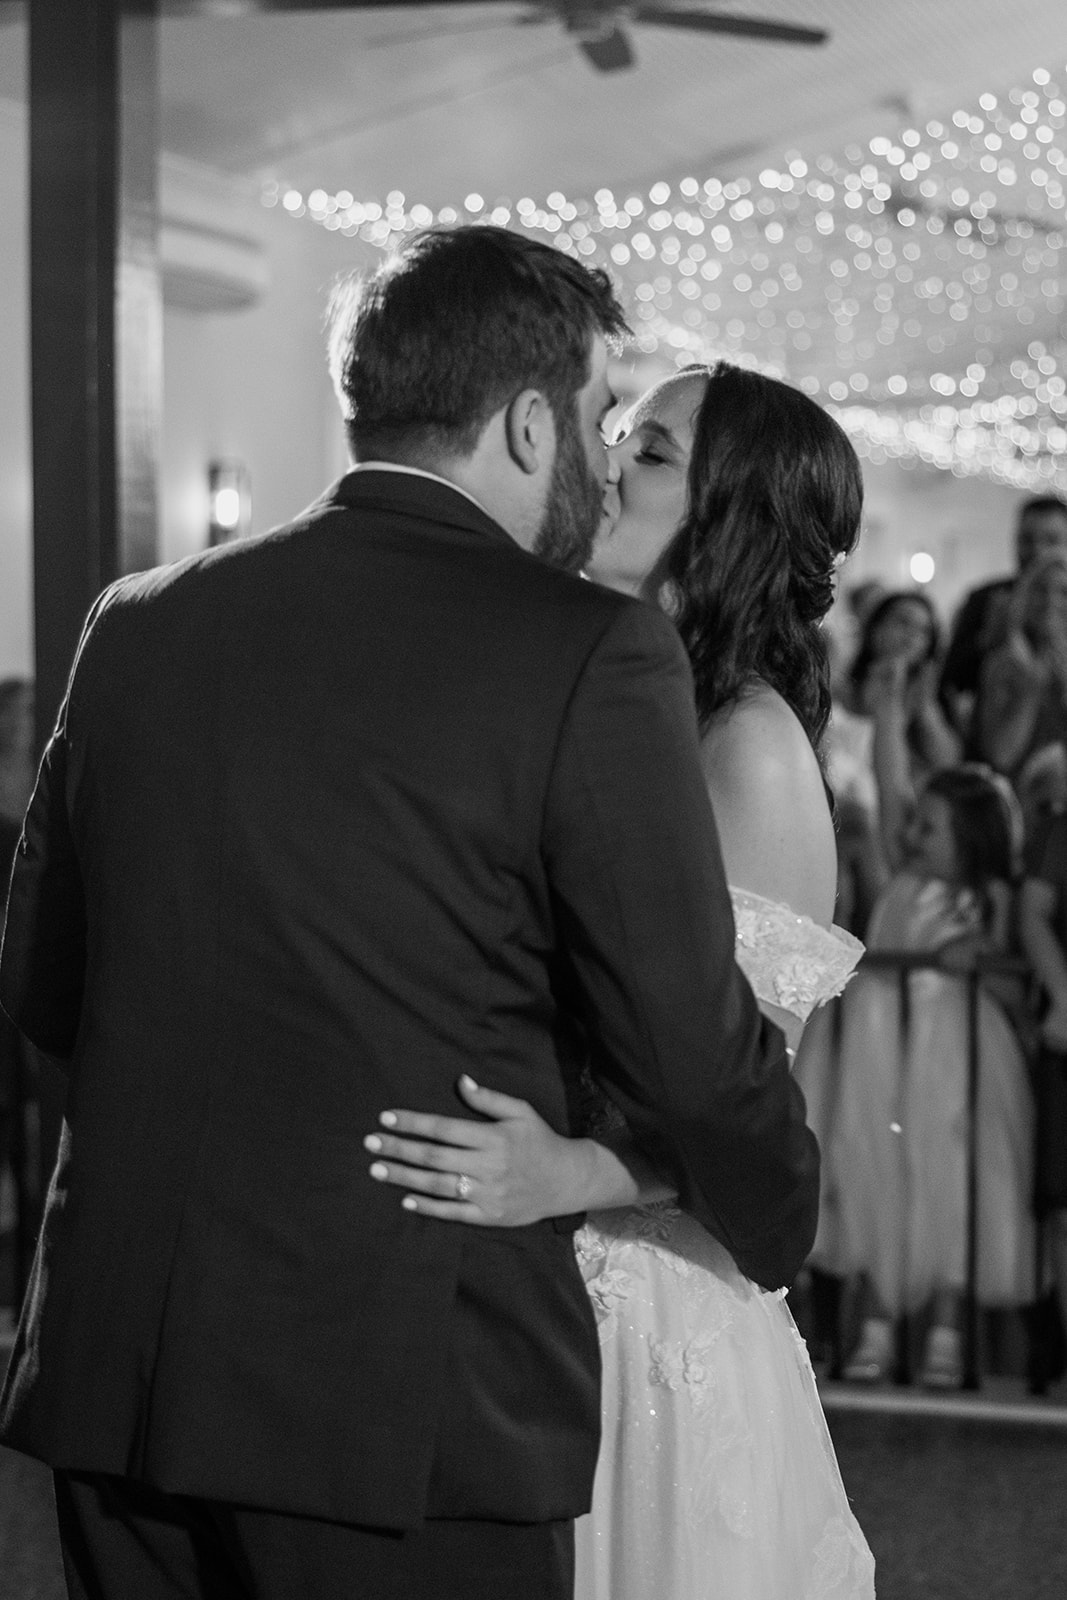 Bride and groom share a kiss on the dance floor at their sentimental Georgia wedding